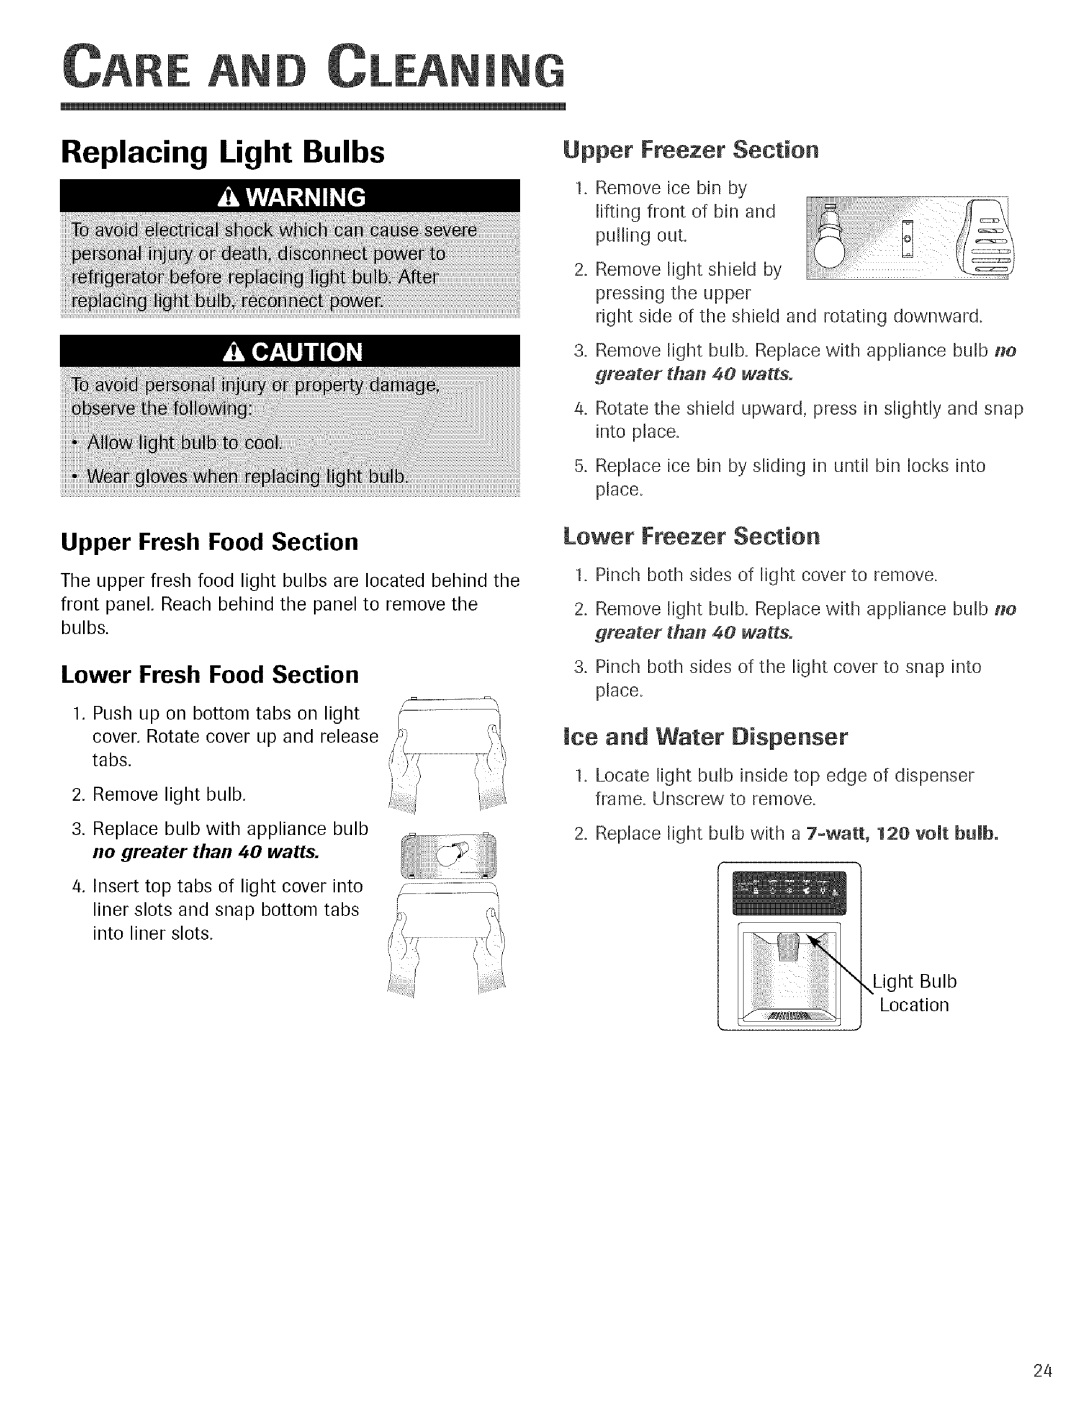 Jenn-Air Refrigerator Replacing Light Bulbs, Upper Fresh Food Section, Lower Fresh Food Section, Upper Freezer Section 